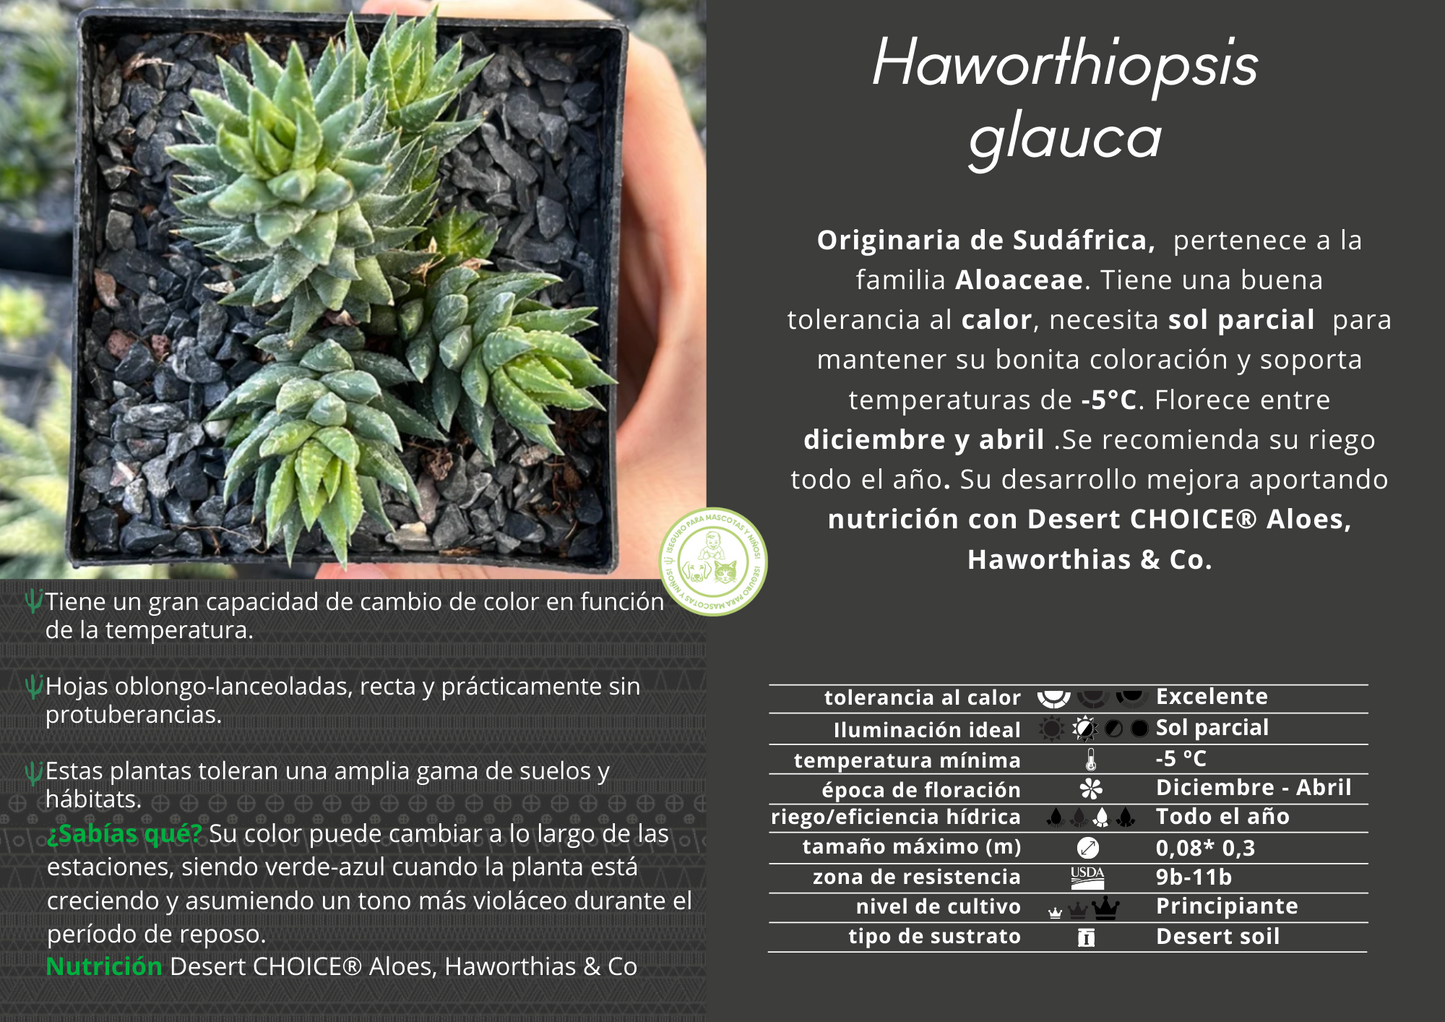 Haworthiopsis glauca